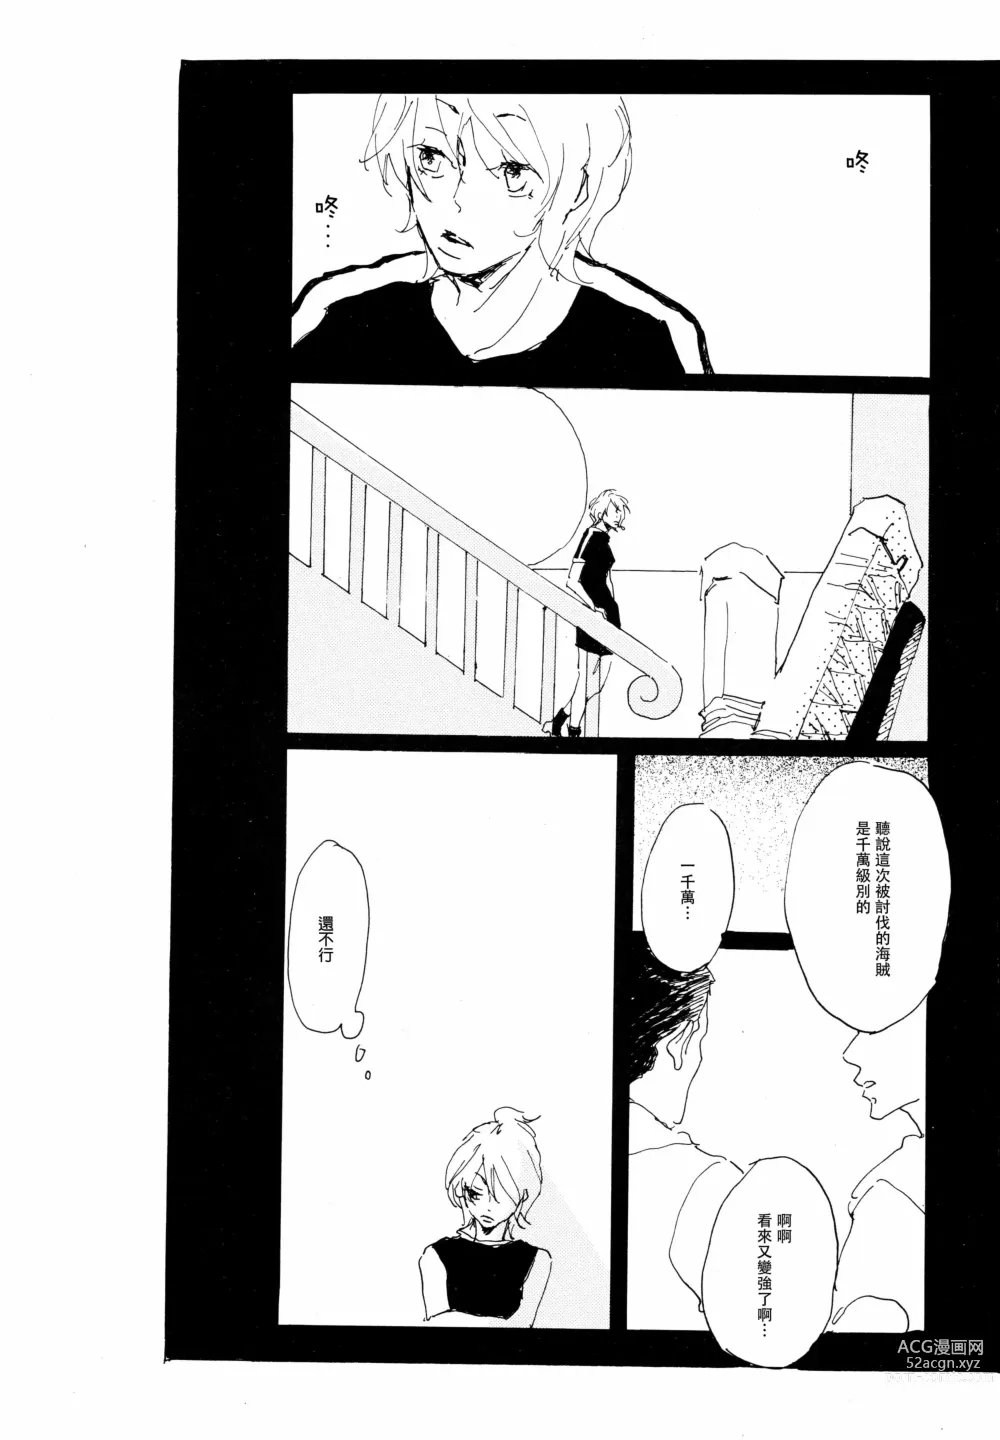 Page 12 of doujinshi 忧郁·与那份没有尽头的悲伤